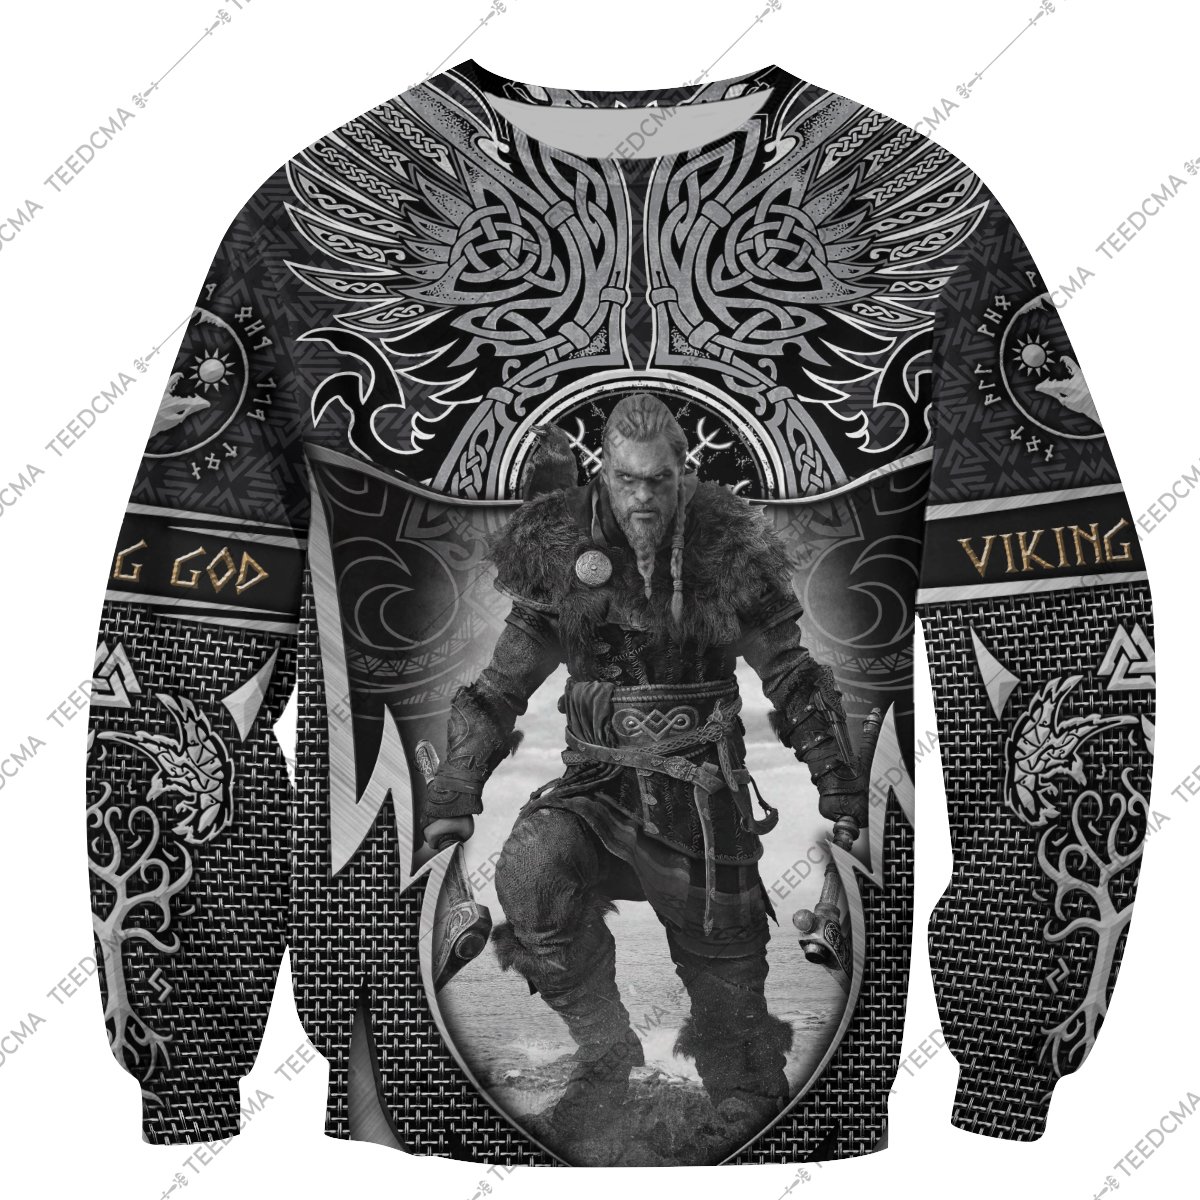 assassin's creed valhalla viking all over printed sweatshirt